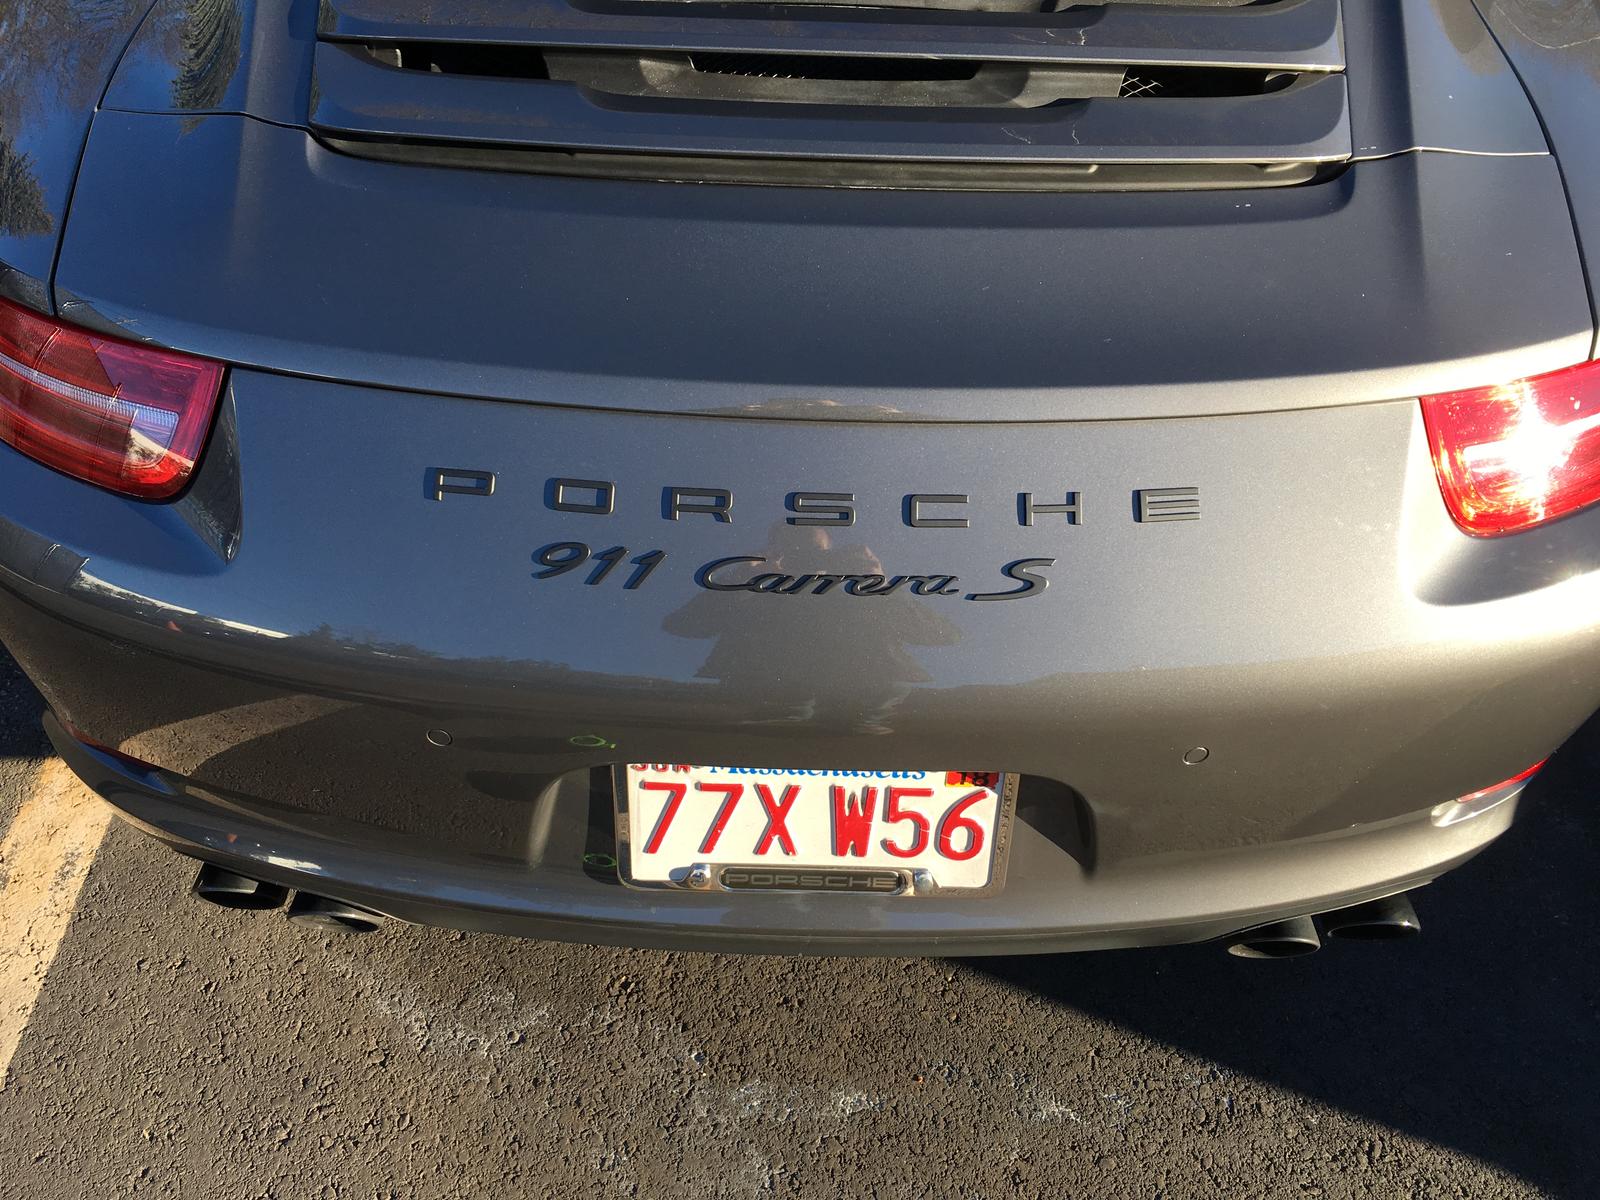 Replaced Rear Emblems on My 991.1 S - Rennlist - Porsche Discussion Forums